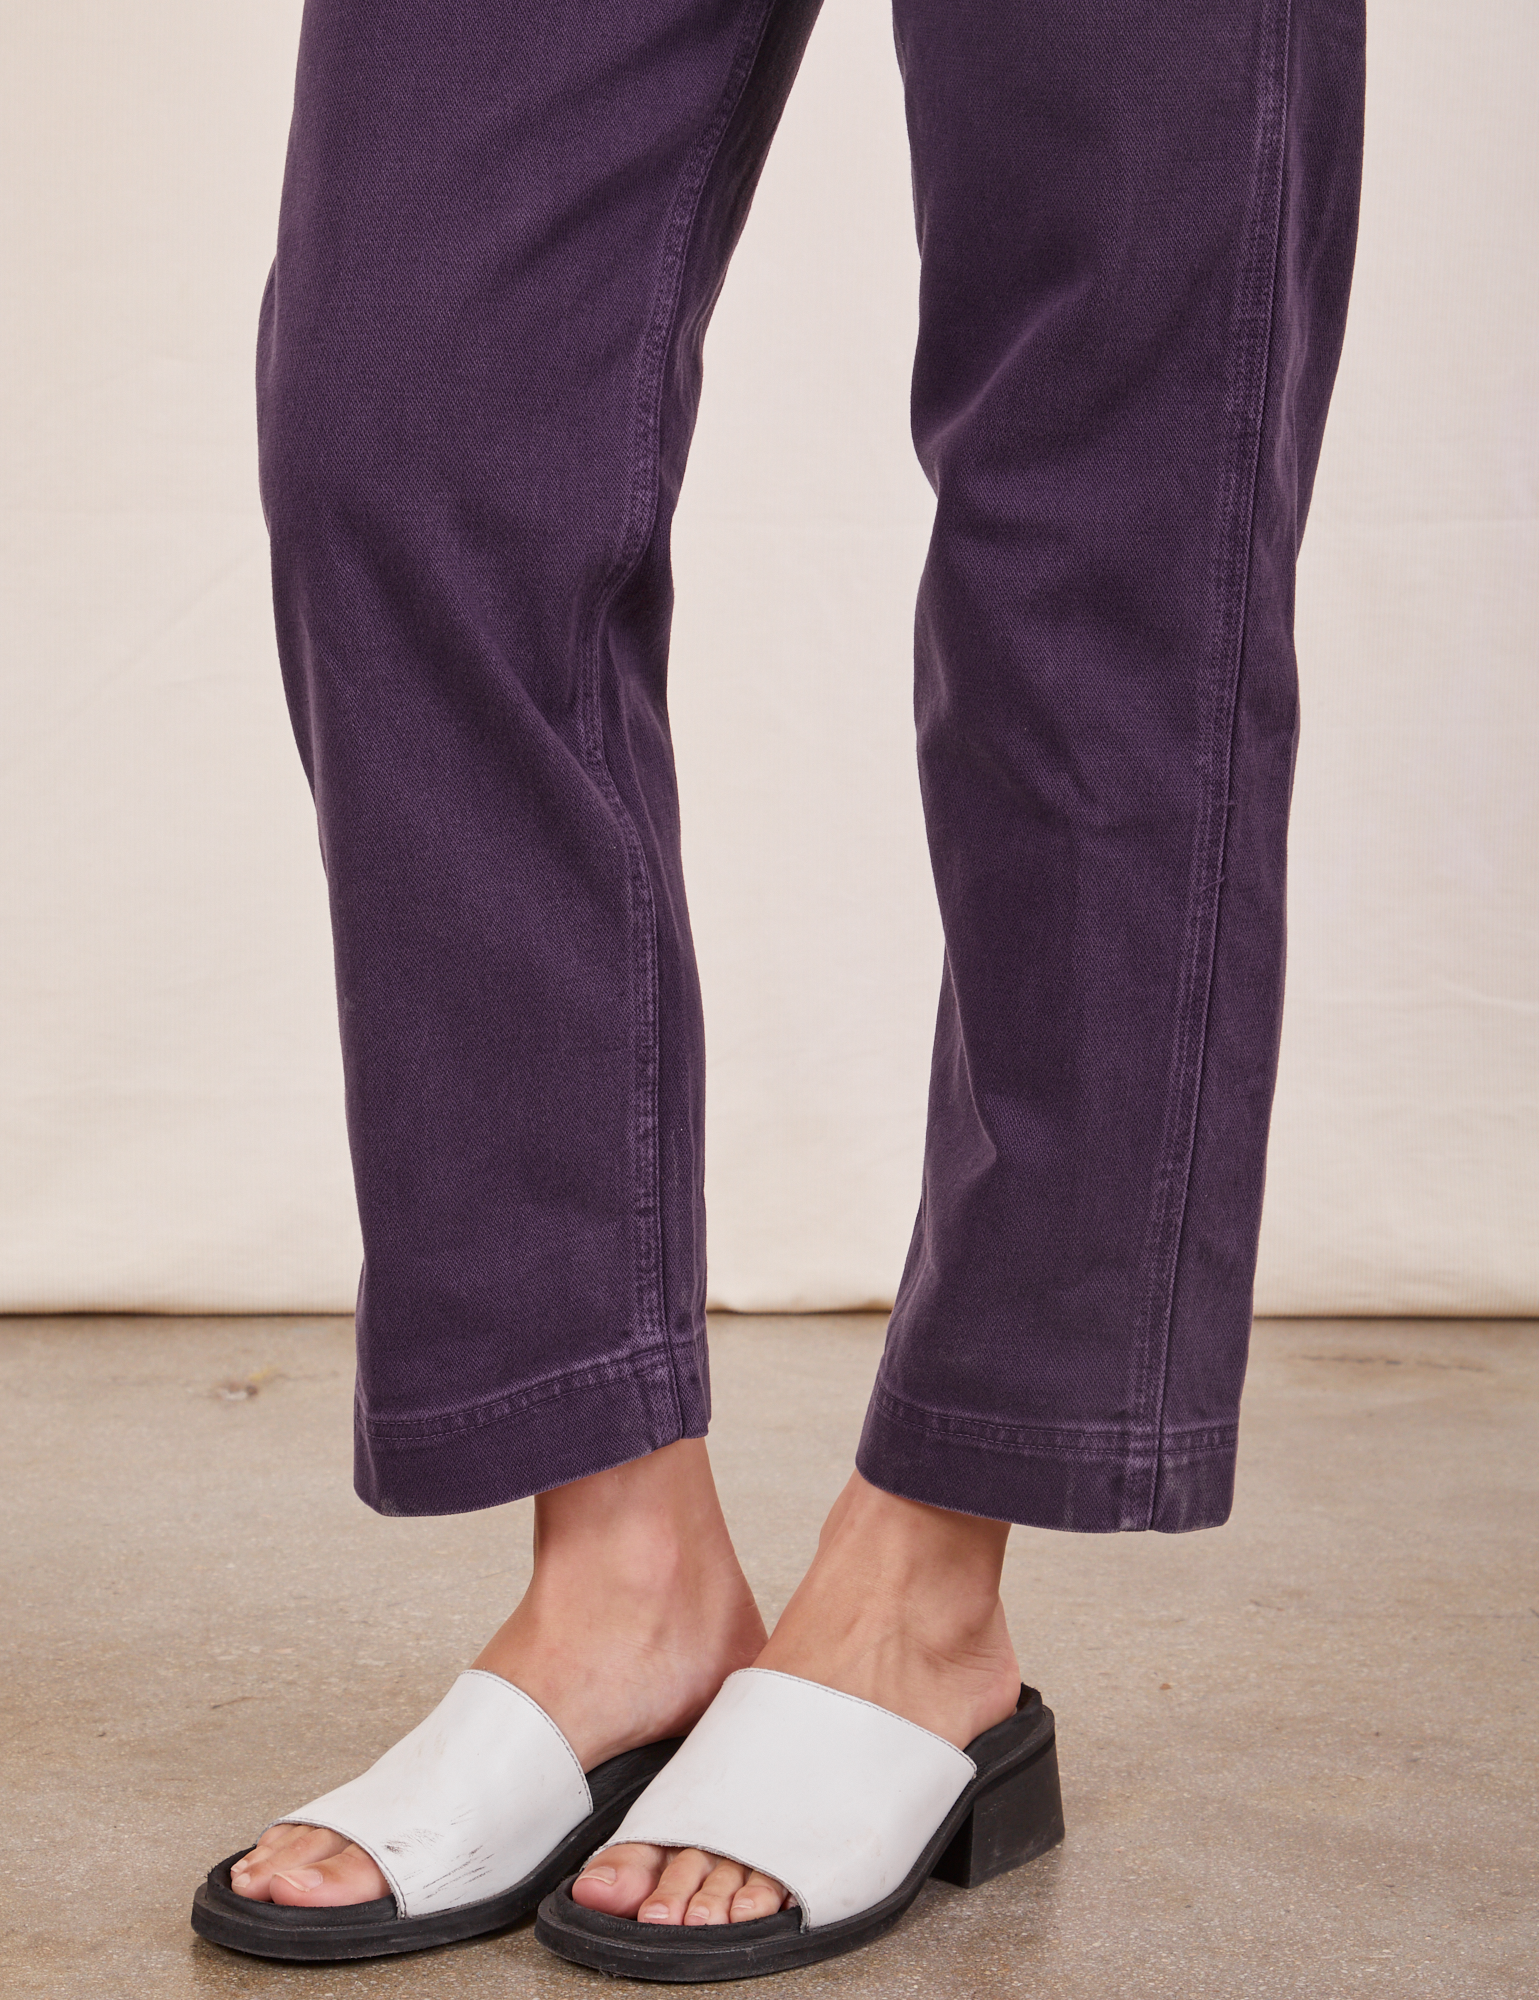 Pant leg close up of Original Overalls in Mono Nebula Purple worn by Alex